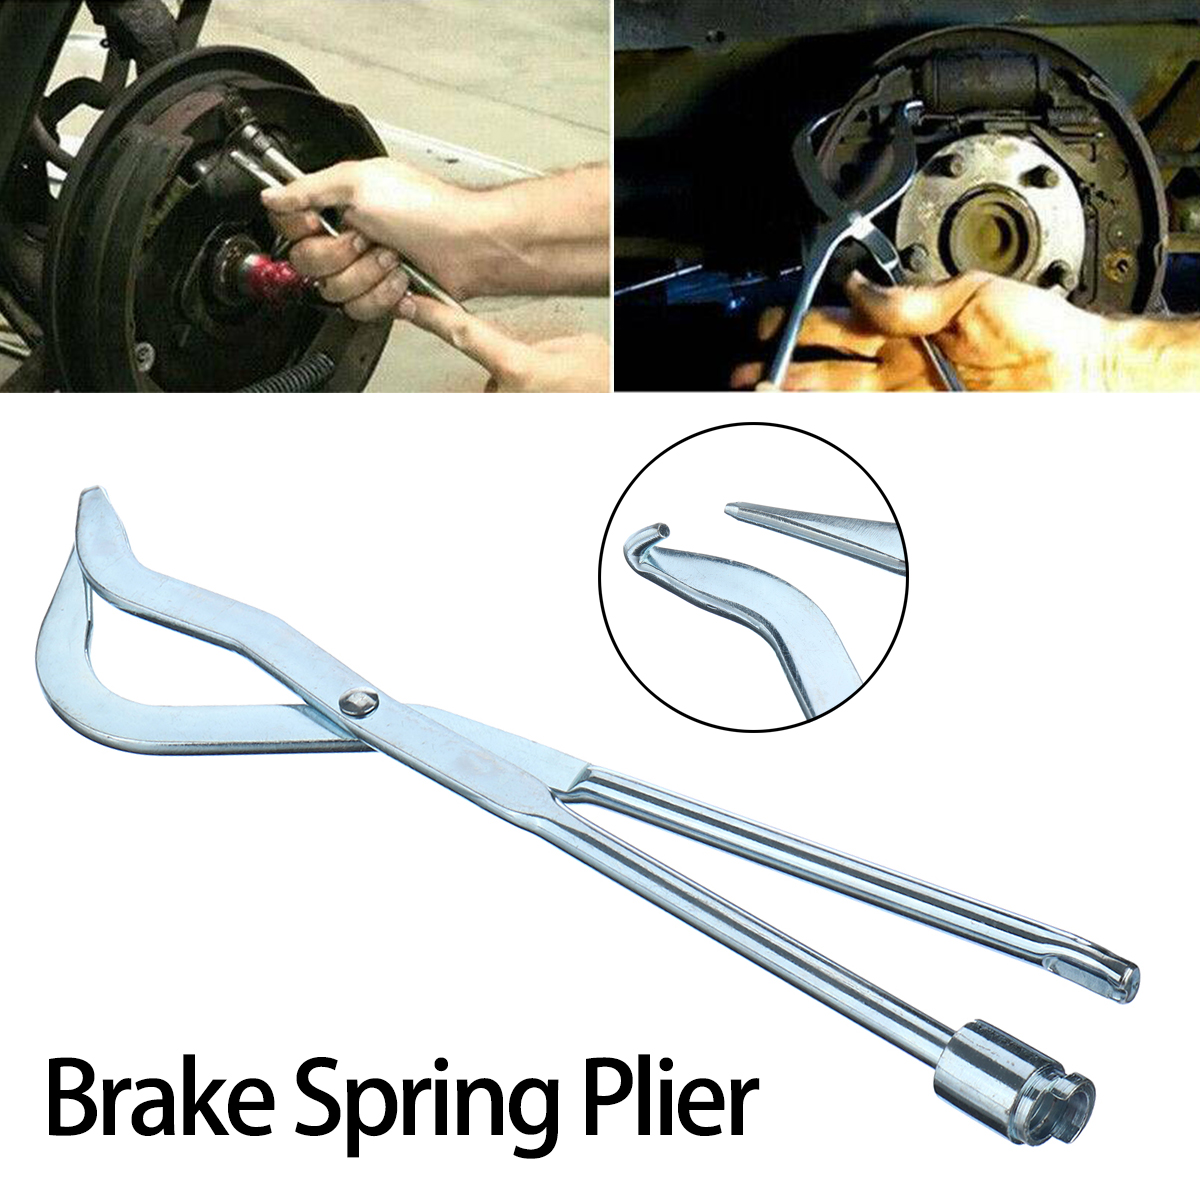 Details about   Brake Spring Plier Remove/Install Shoe Return Springs Workshop Professional Tool